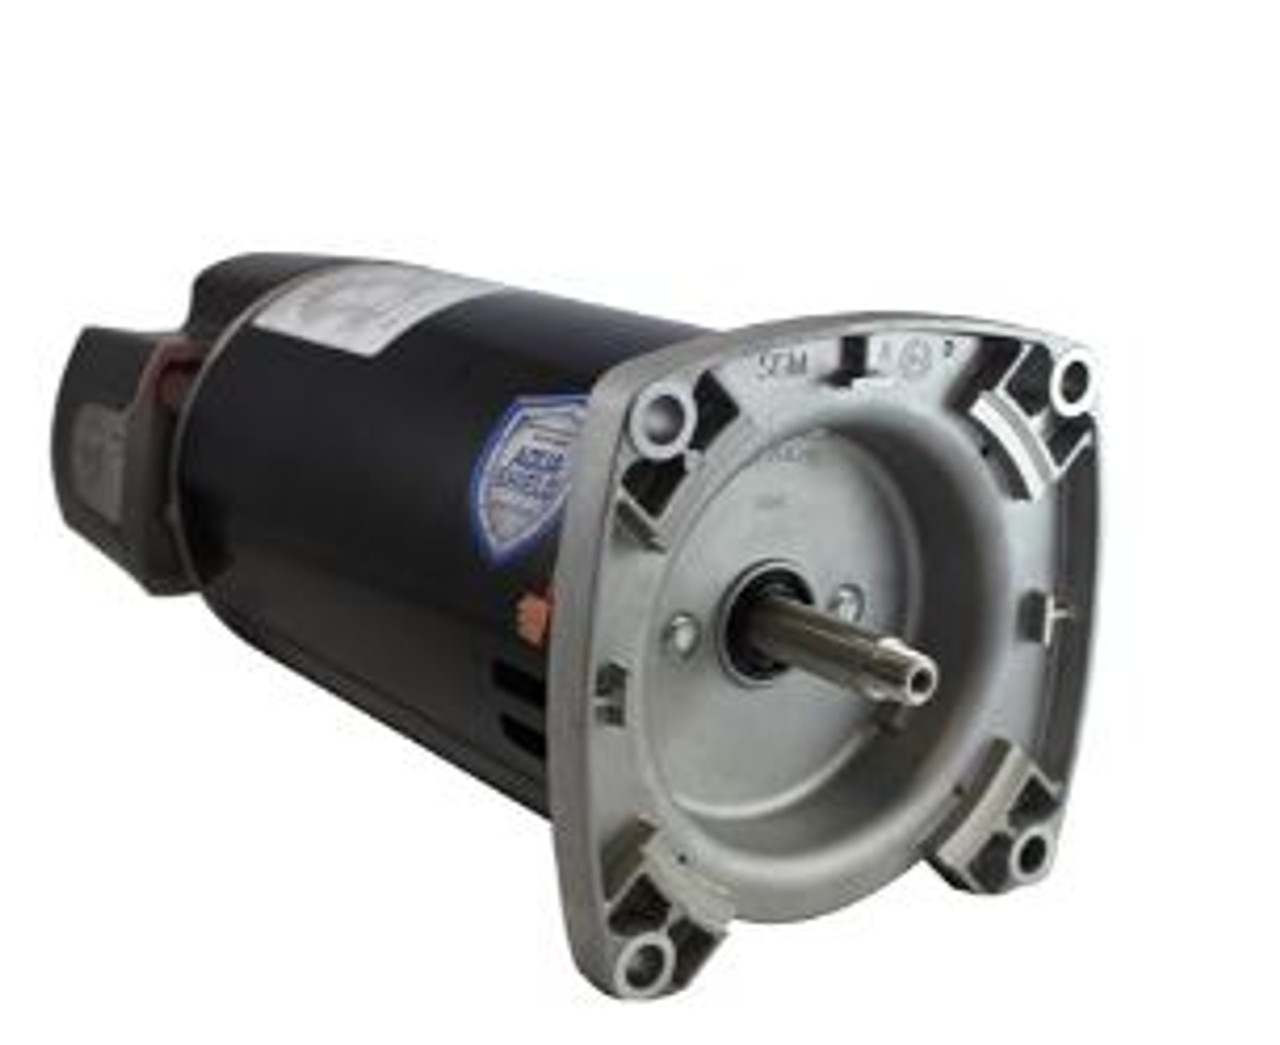 ASQ065 Pool motor 0.65 HP - ODP - 3450 RPM